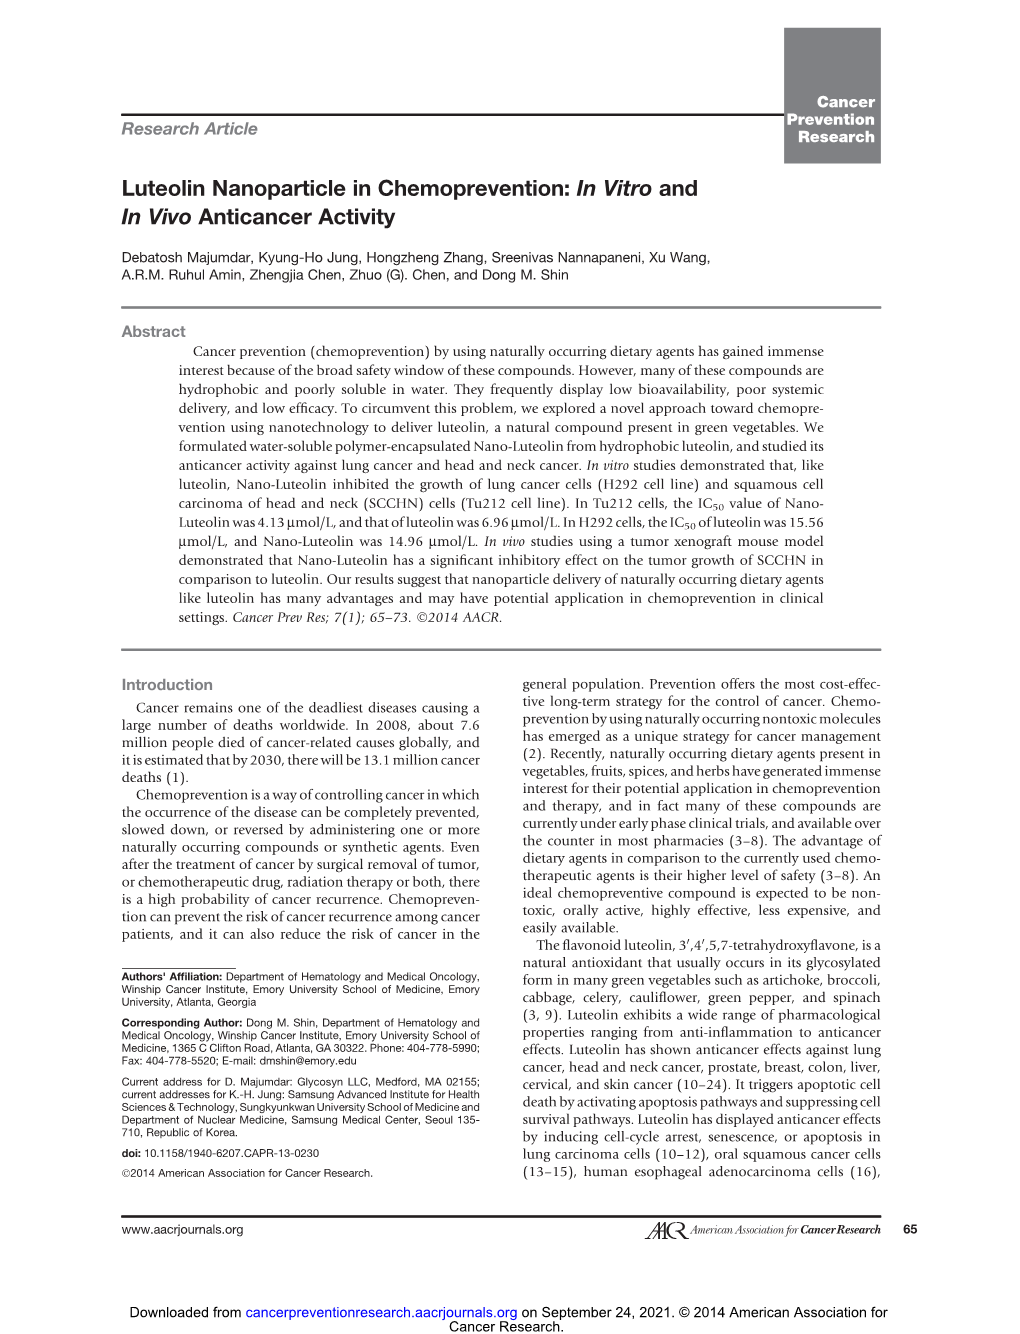 Luteolin Nanoparticle in Chemoprevention: in Vitro and in Vivo Anticancer Activity